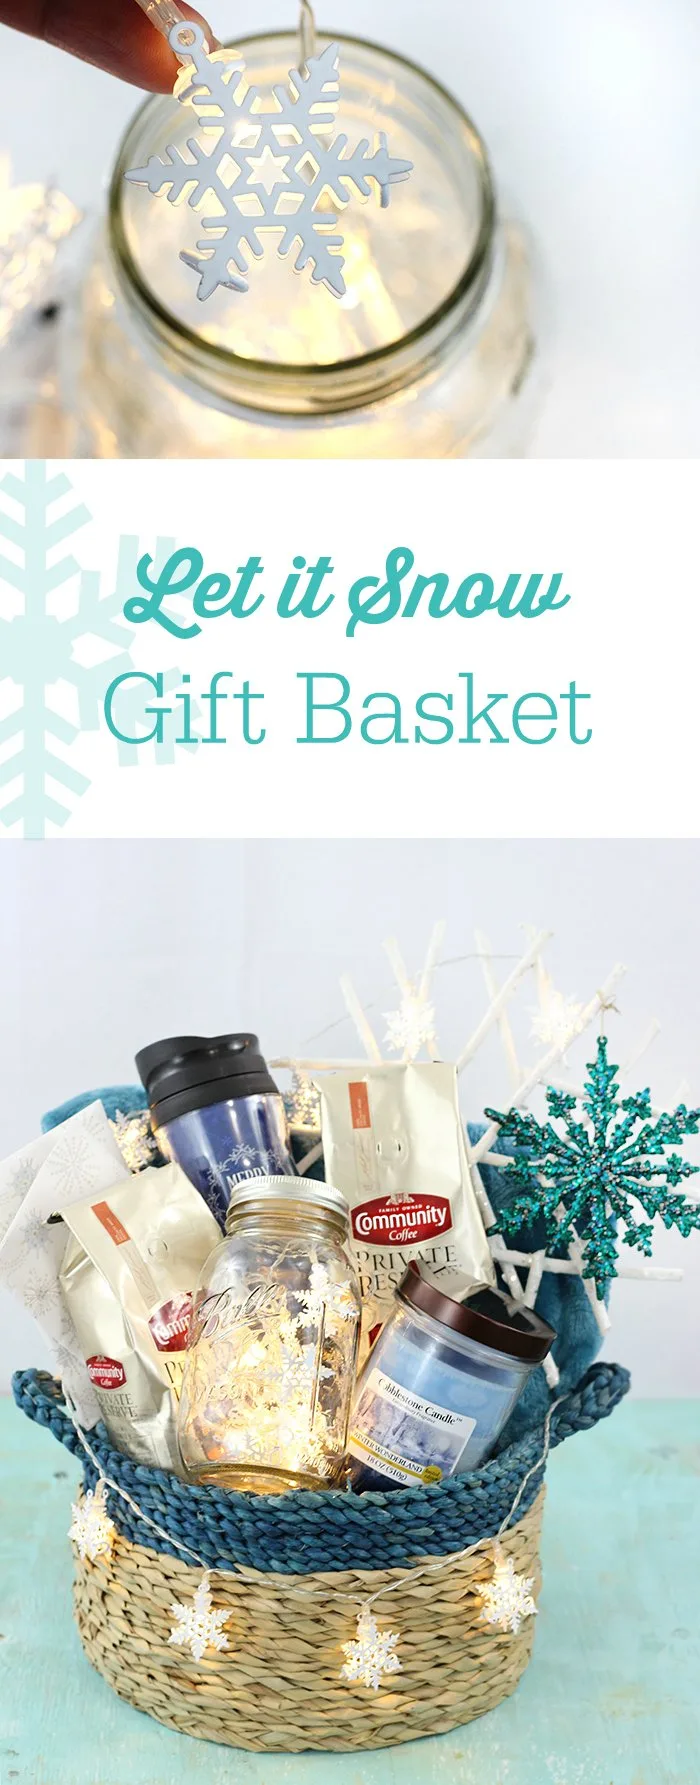 let us snow gift basket.jpg